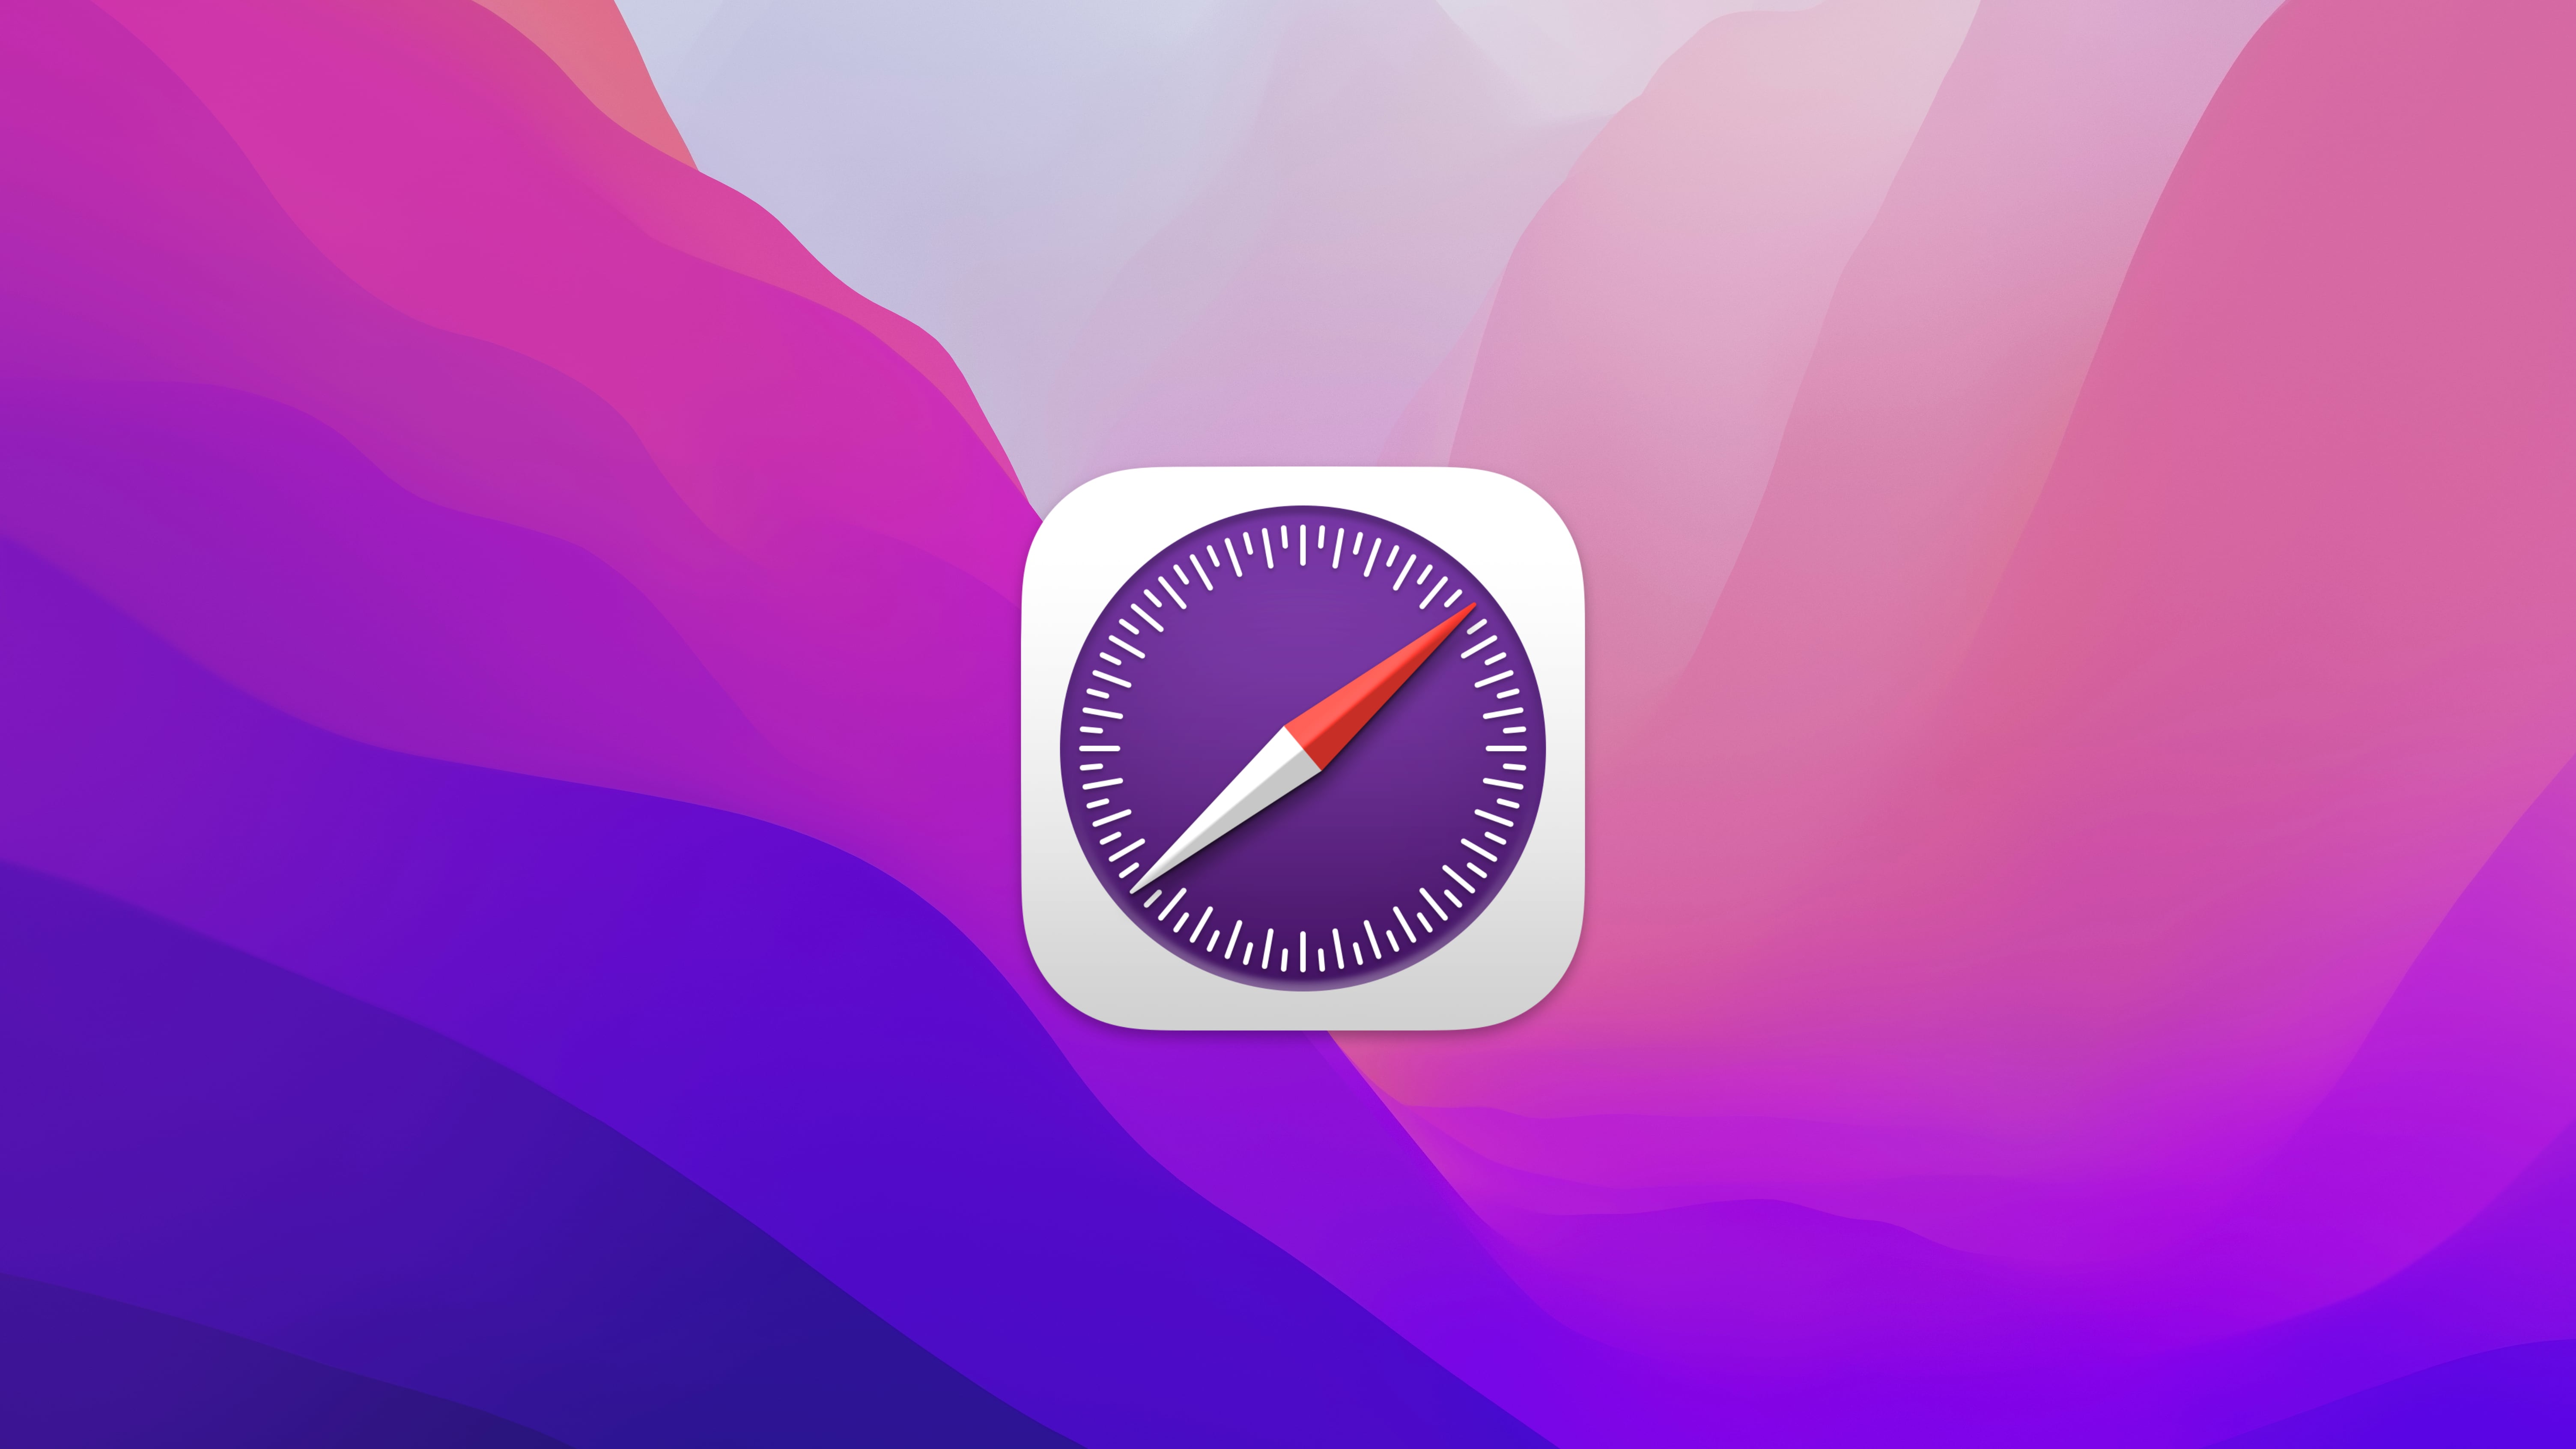 MacBook with Safari 15 running on purple background